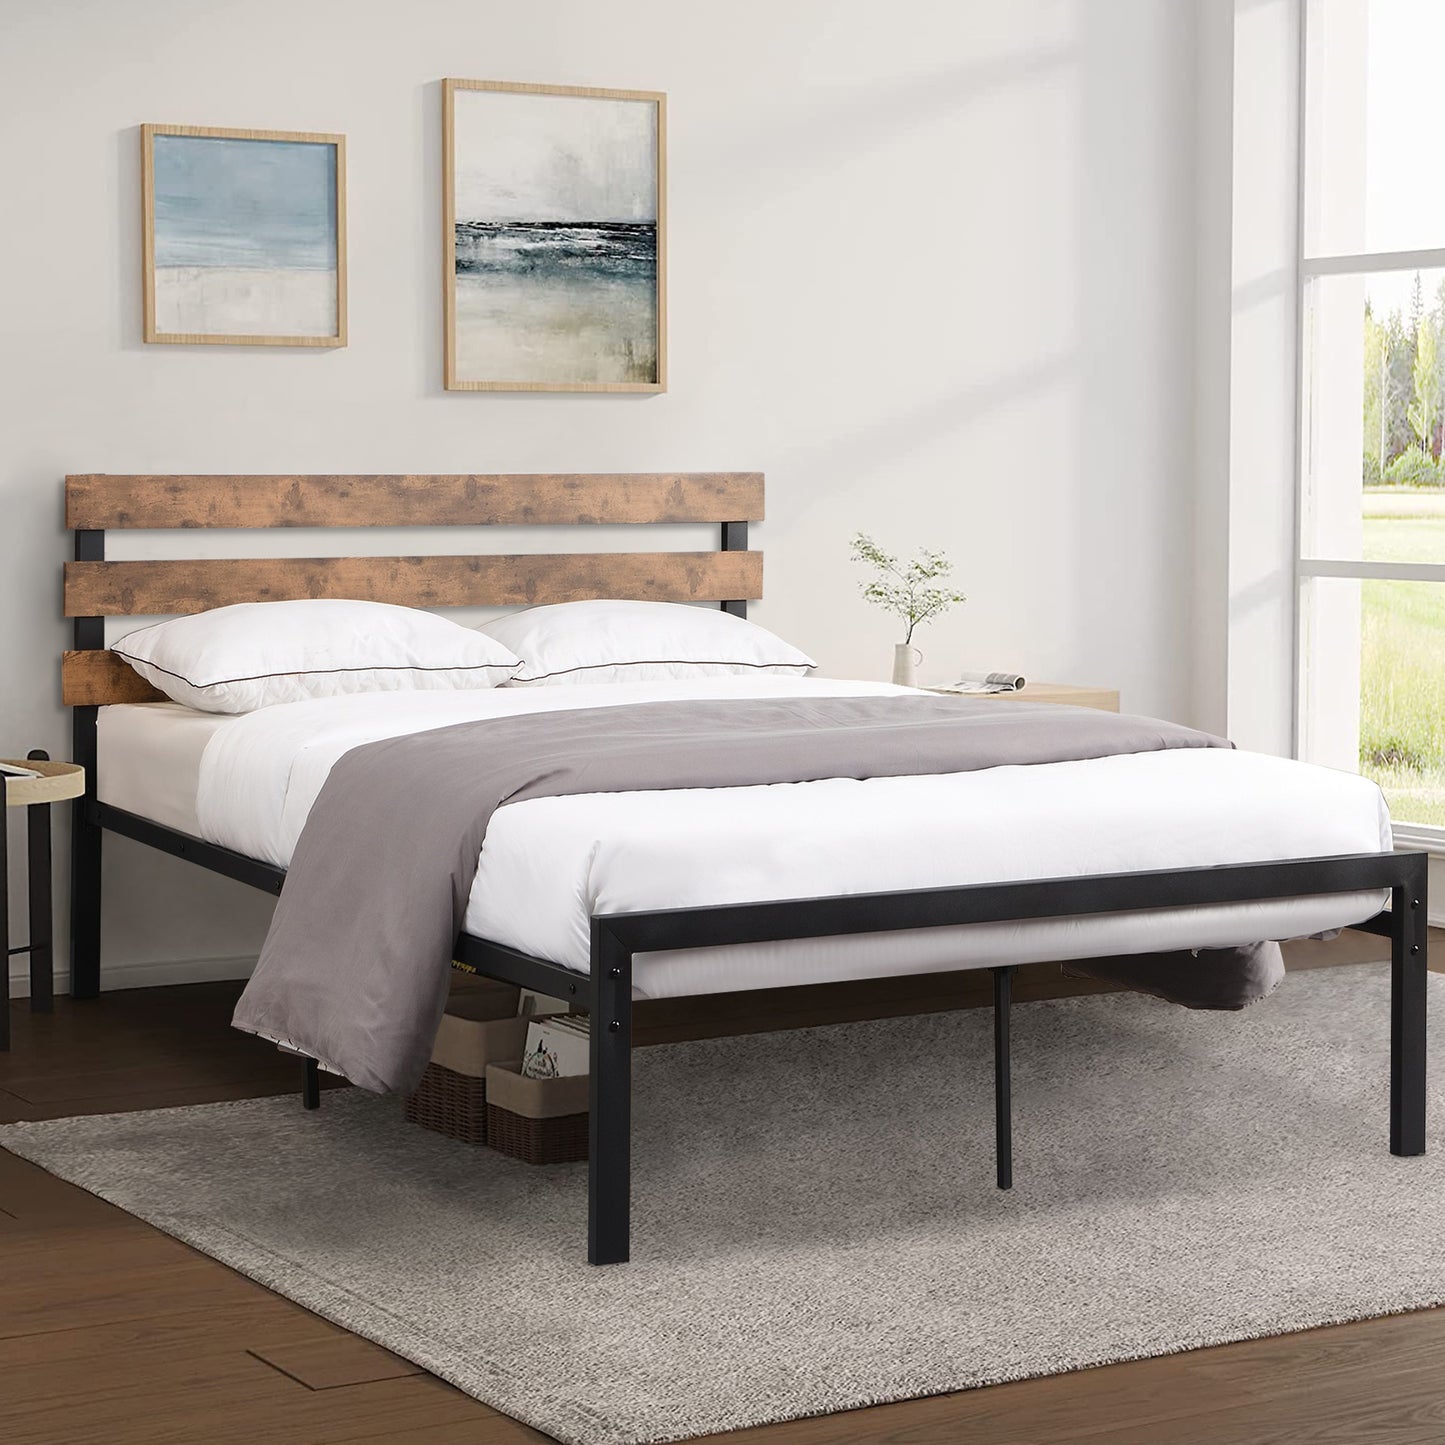 SYNGAR Metal Full Size Platform Bed Frame with Industrial Headboard, Bedroom Furnitrue with Strong Slat Support, Black